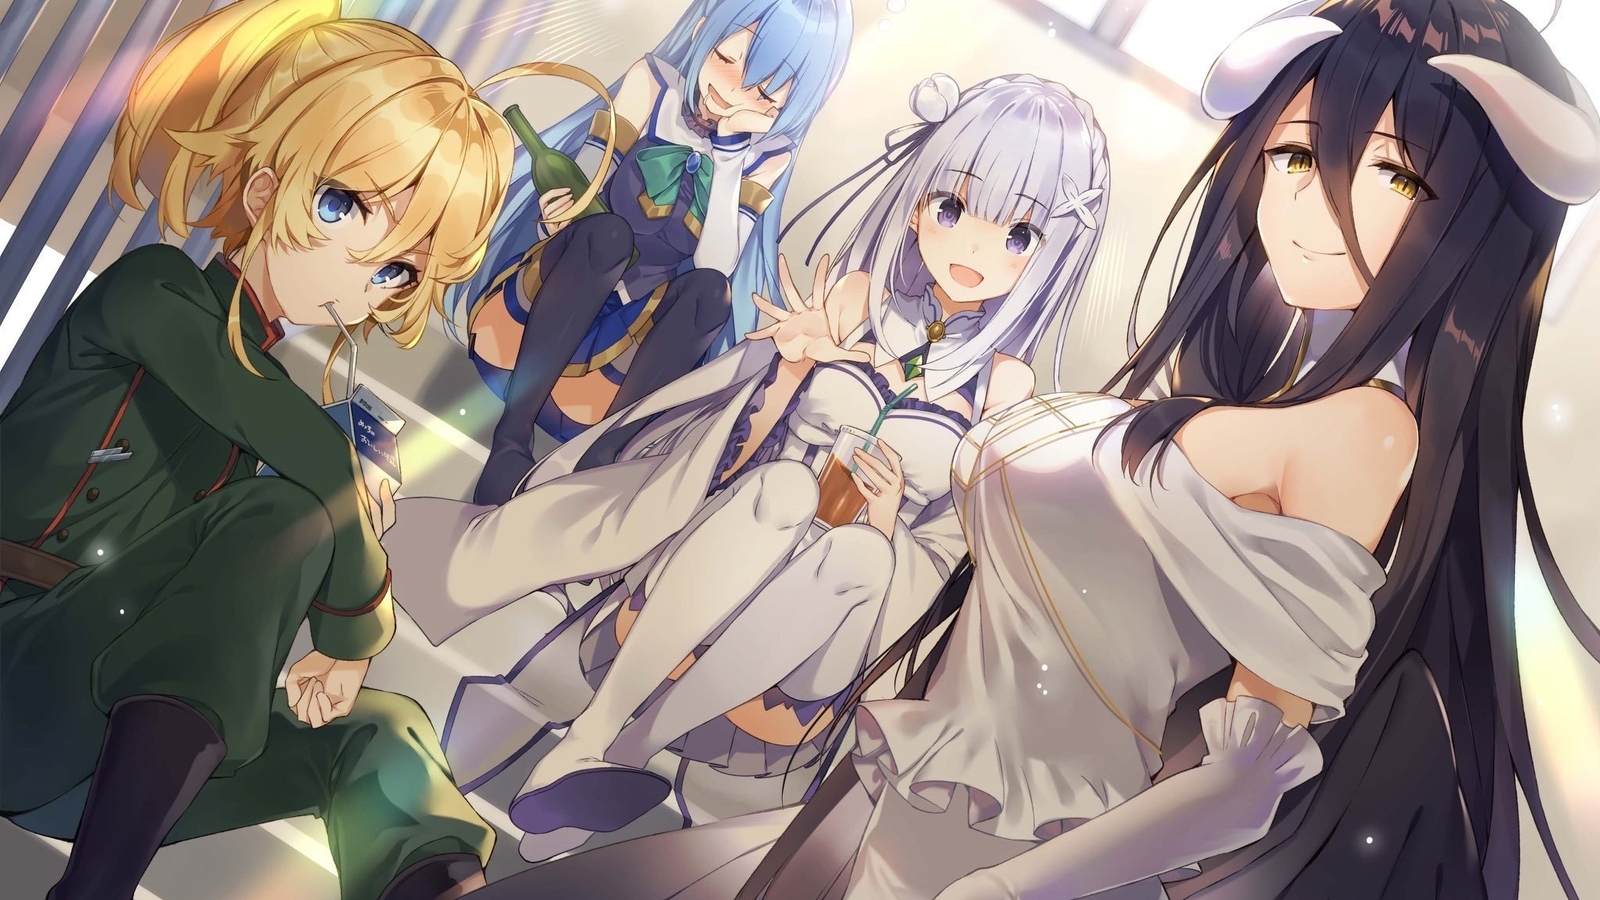 Image: Anime, characters, girls, Isekai Quartet, Konosuba, Overlord, Re:Zero - Starting Life In Another World